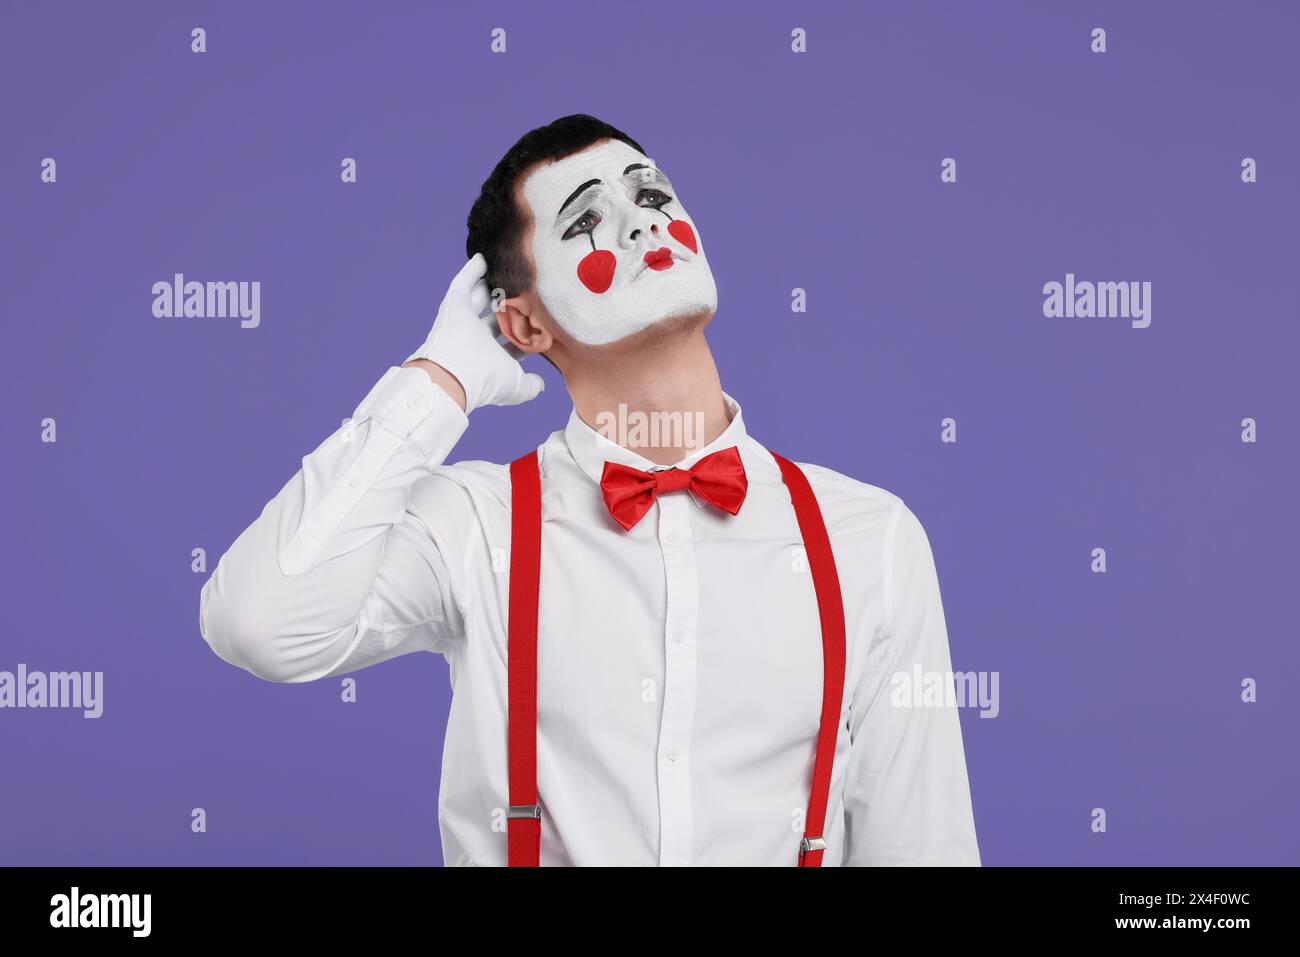 Mime artist making sad face on purple background Stock Photo